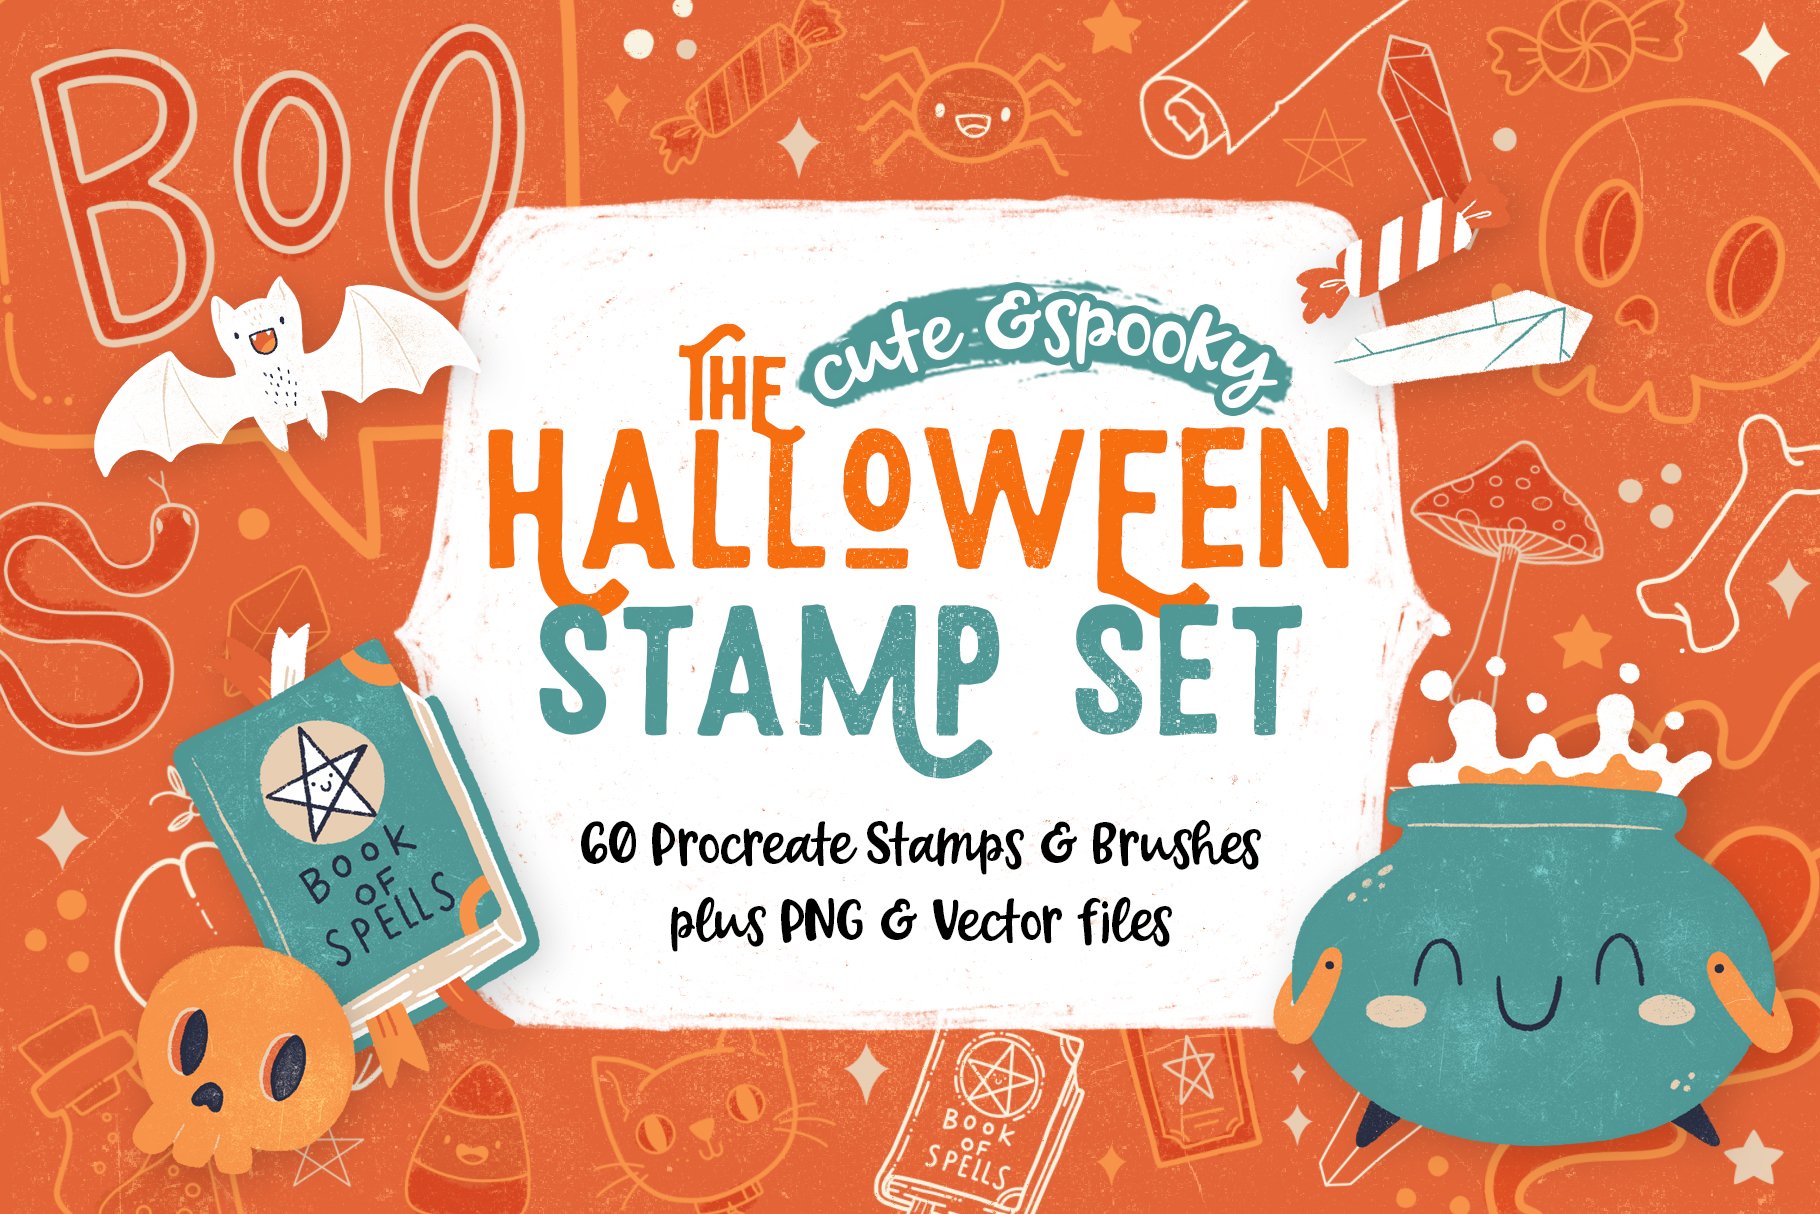 Procreate Halloween Stamp Setcover image.